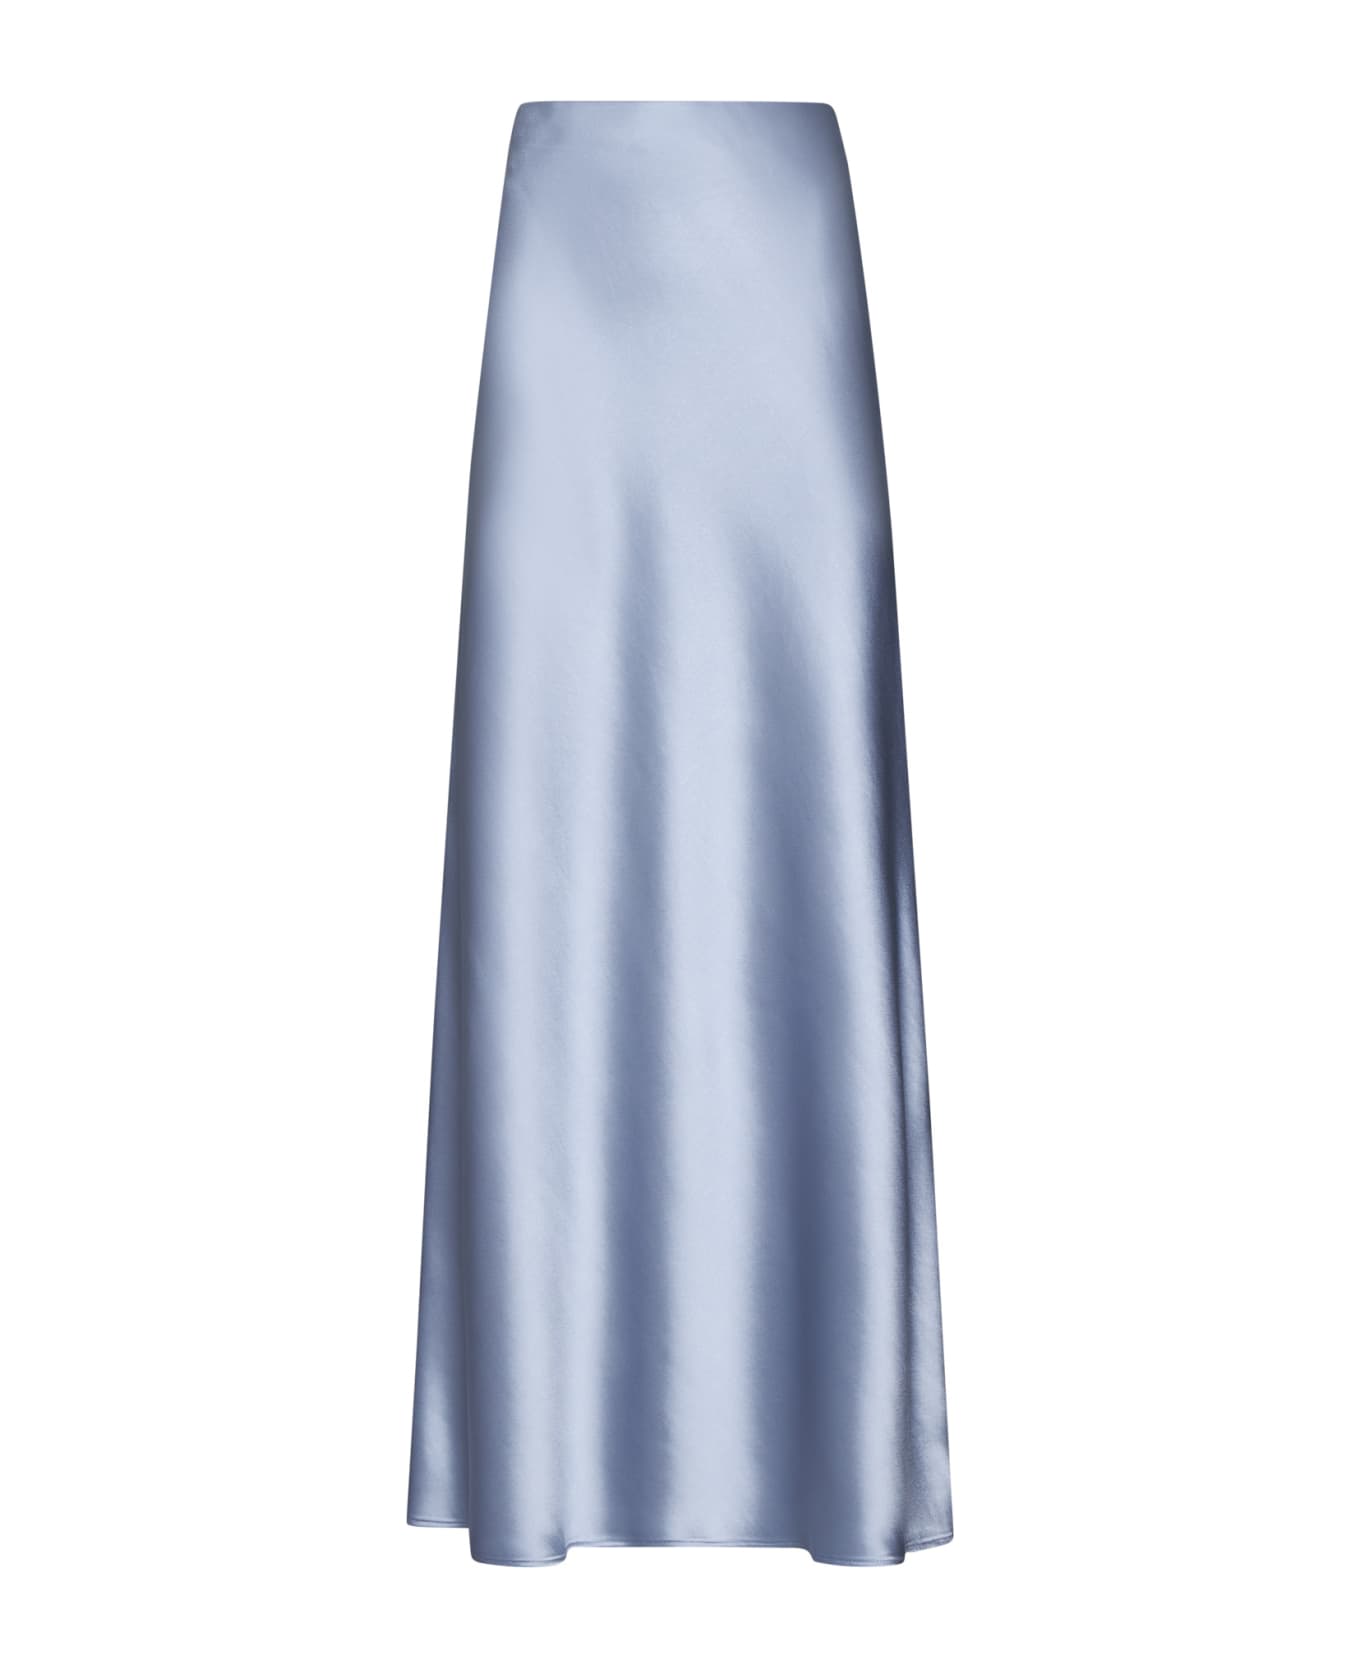 Blanca Vita Skirt - Polvere スカート